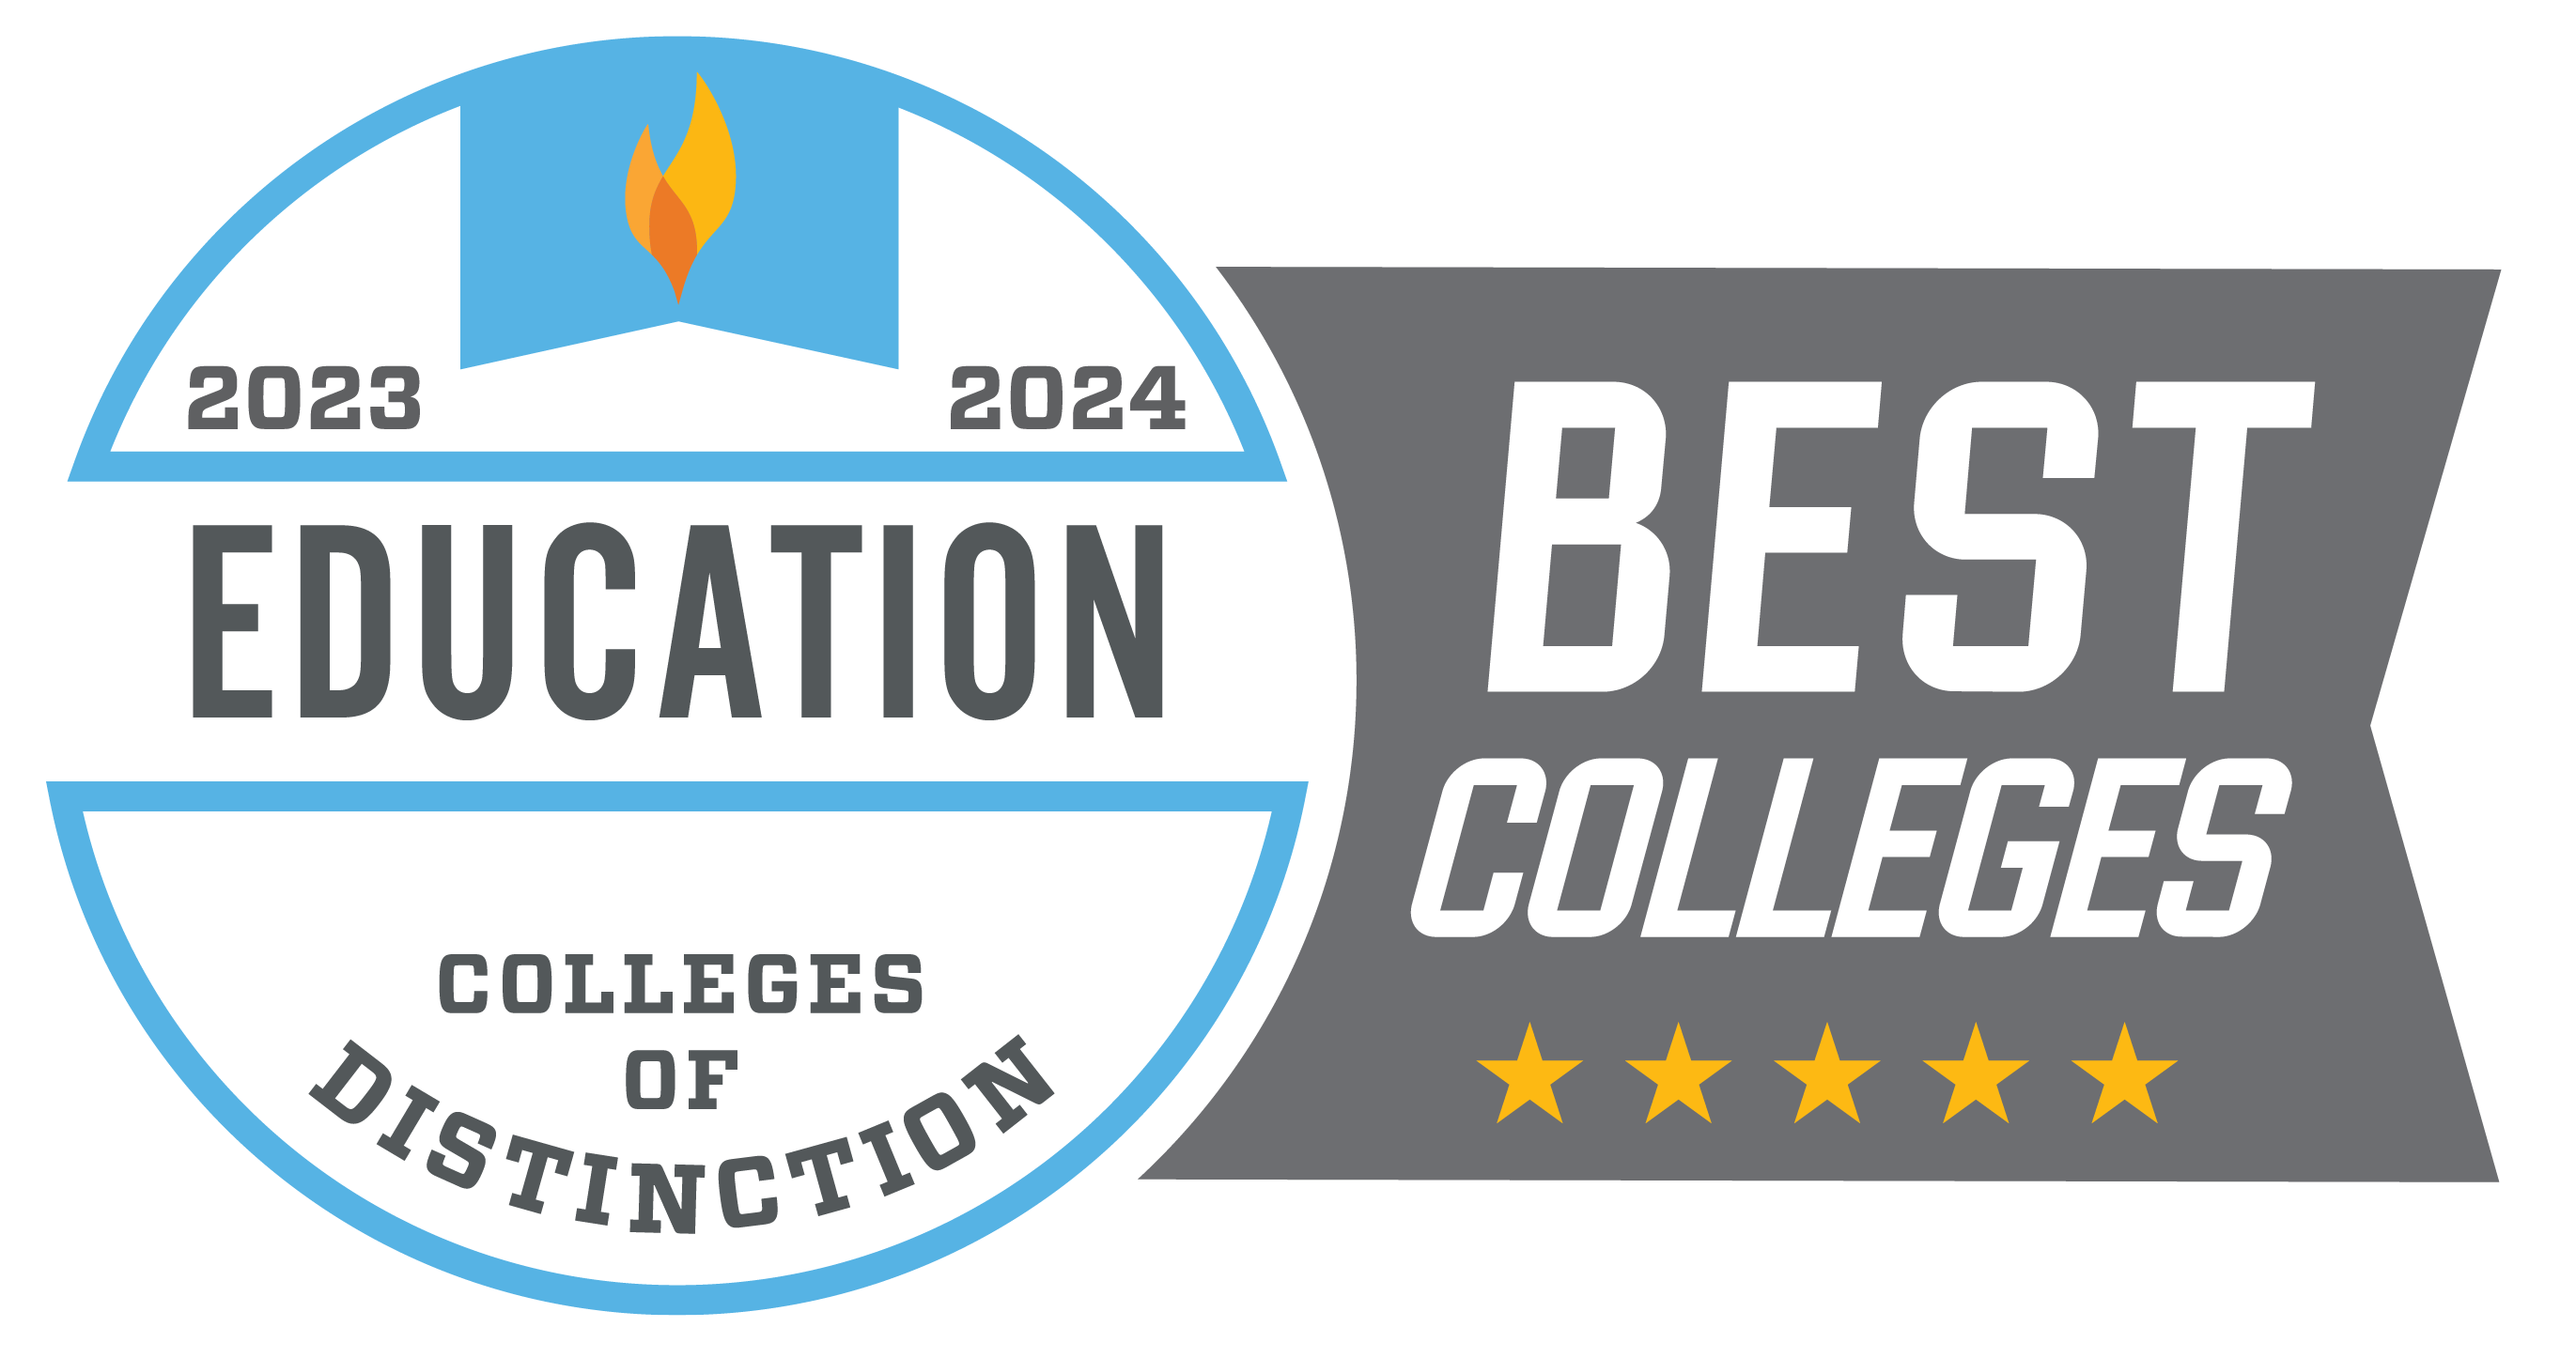 College of Distinction: 2022-2023 Education badge